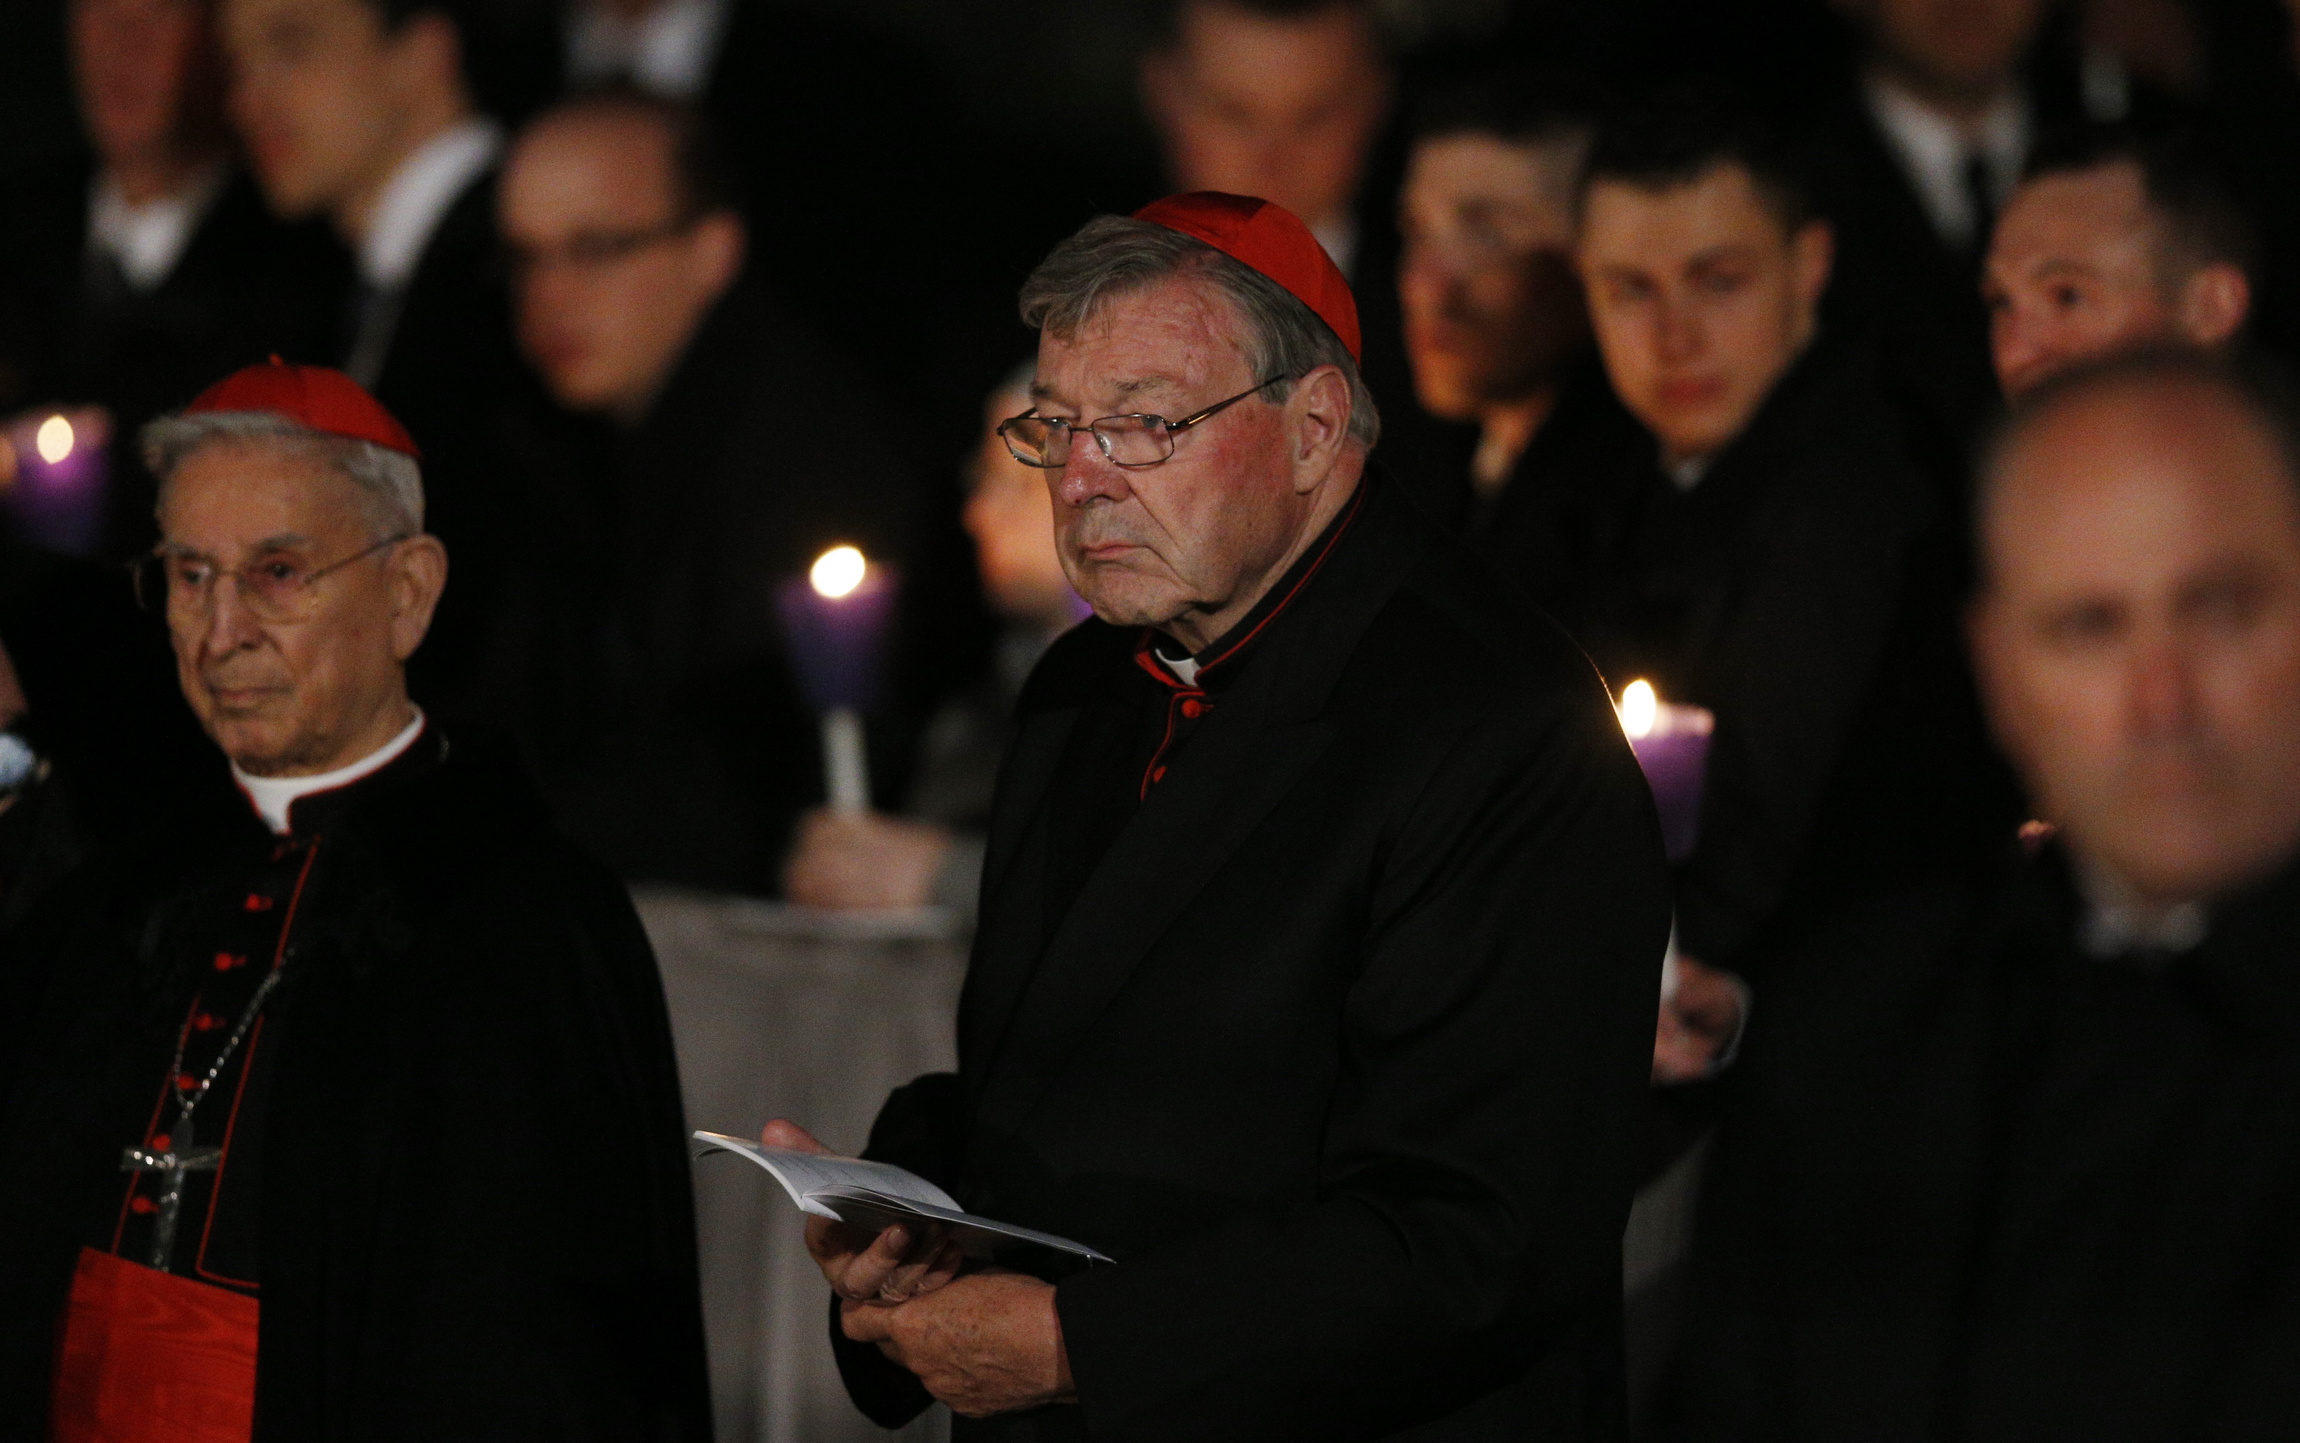 Catholics mourn death of Cardinal Castrillon Hoyos